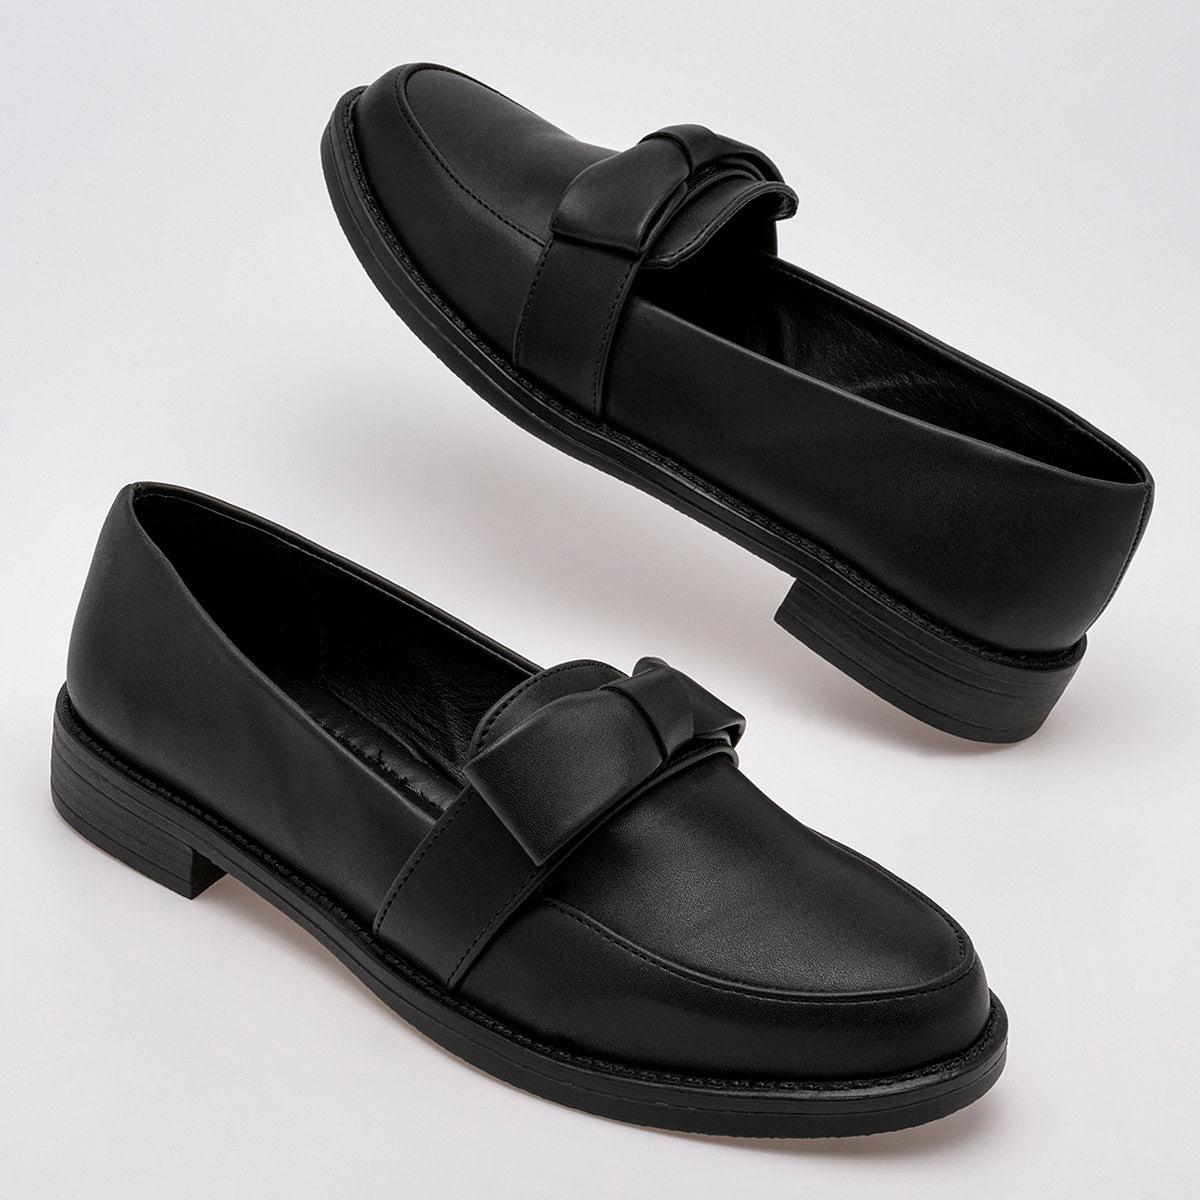 Pakar.com - Mayo: Regalos para mamá | Zapatos para mujer cod-120312